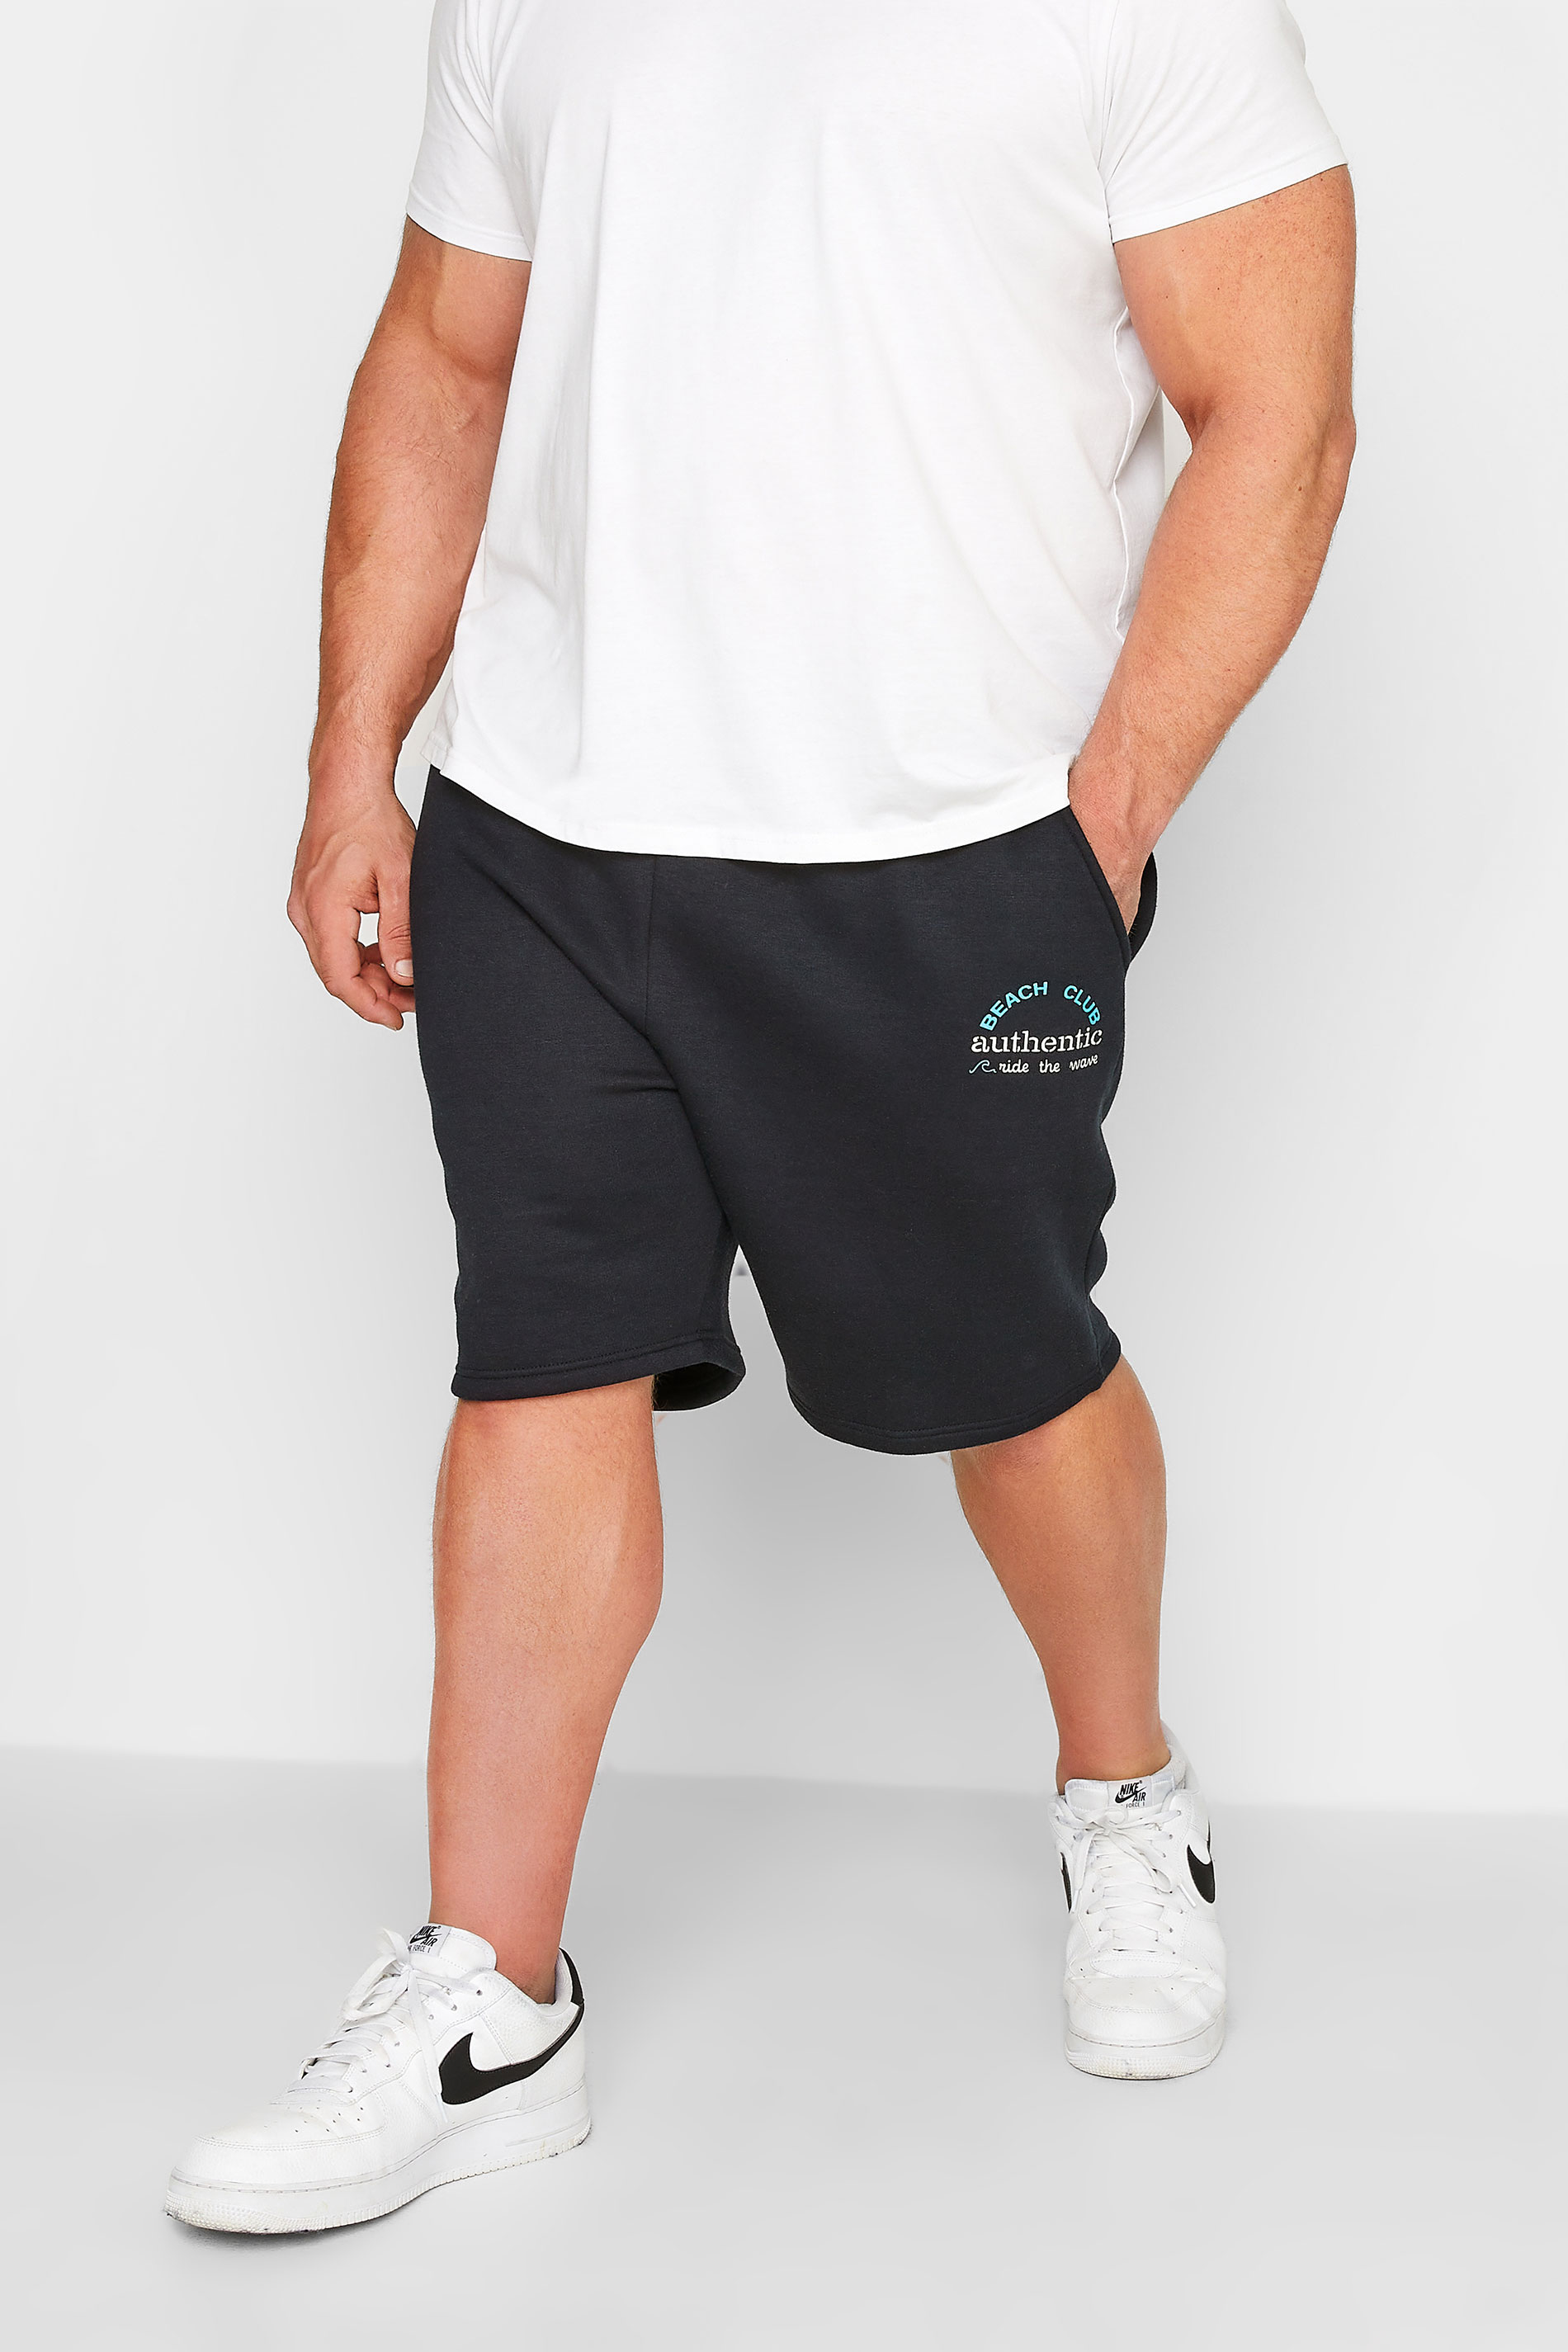 BadRhino Big & Tall Navy Blue 'Authentic' Jogger Shorts | BadRhino 1